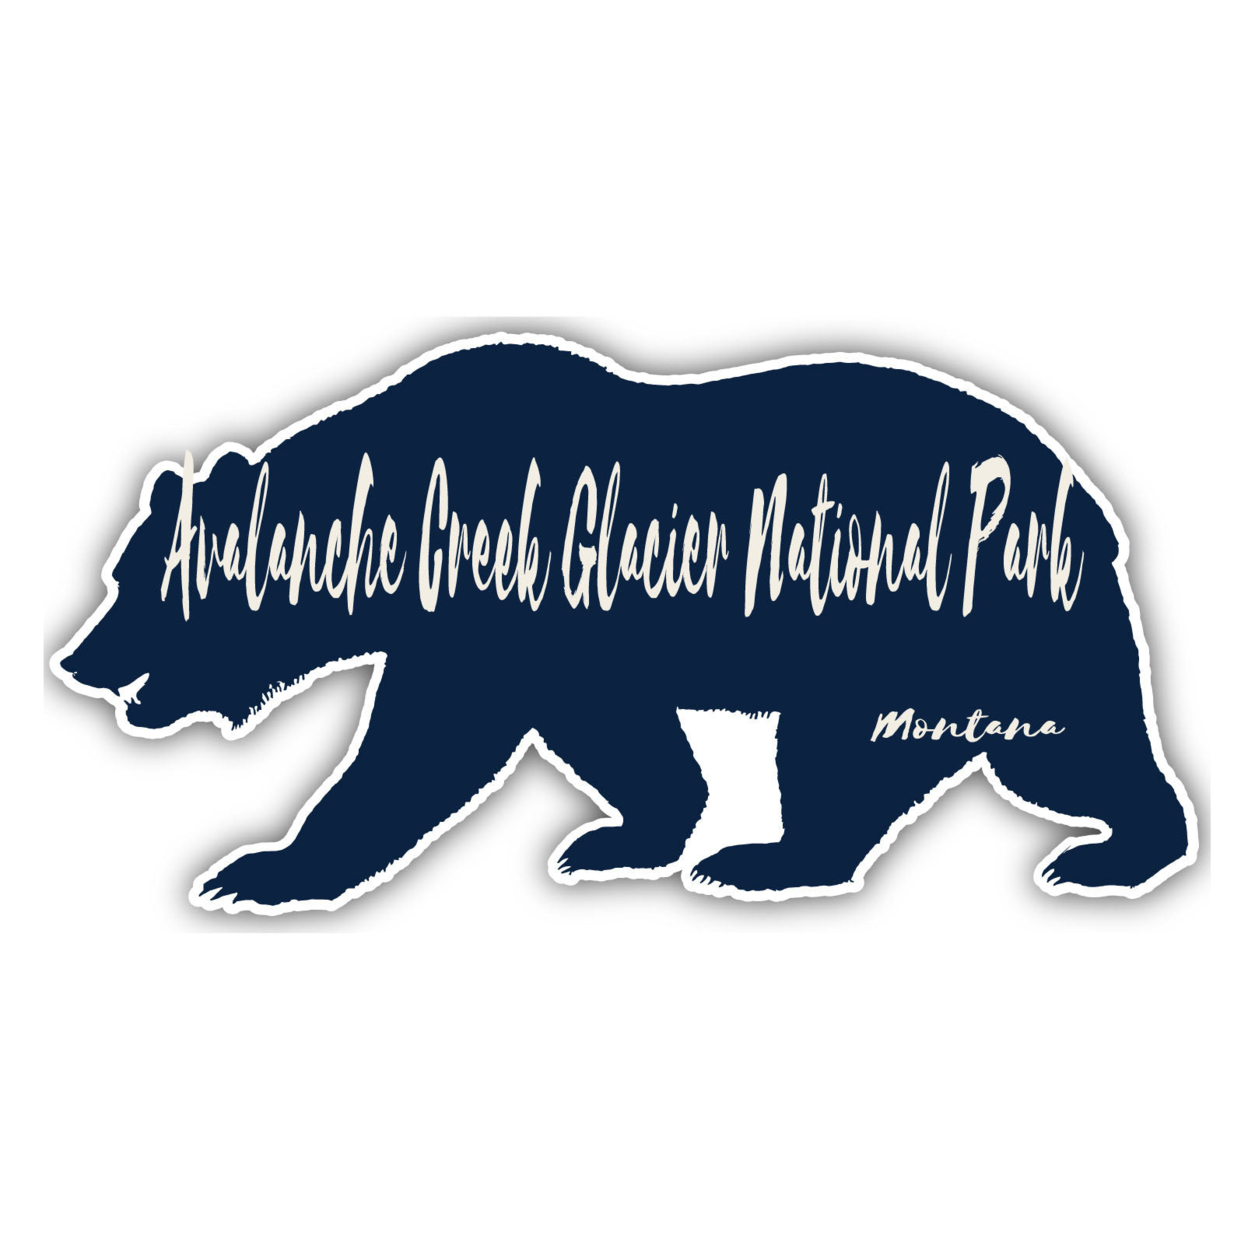 Avalanche Creek Glacier National Park Montana Souvenir Decorative Stickers (Choose Theme And Size) - Single Unit, 6-Inch, Bear